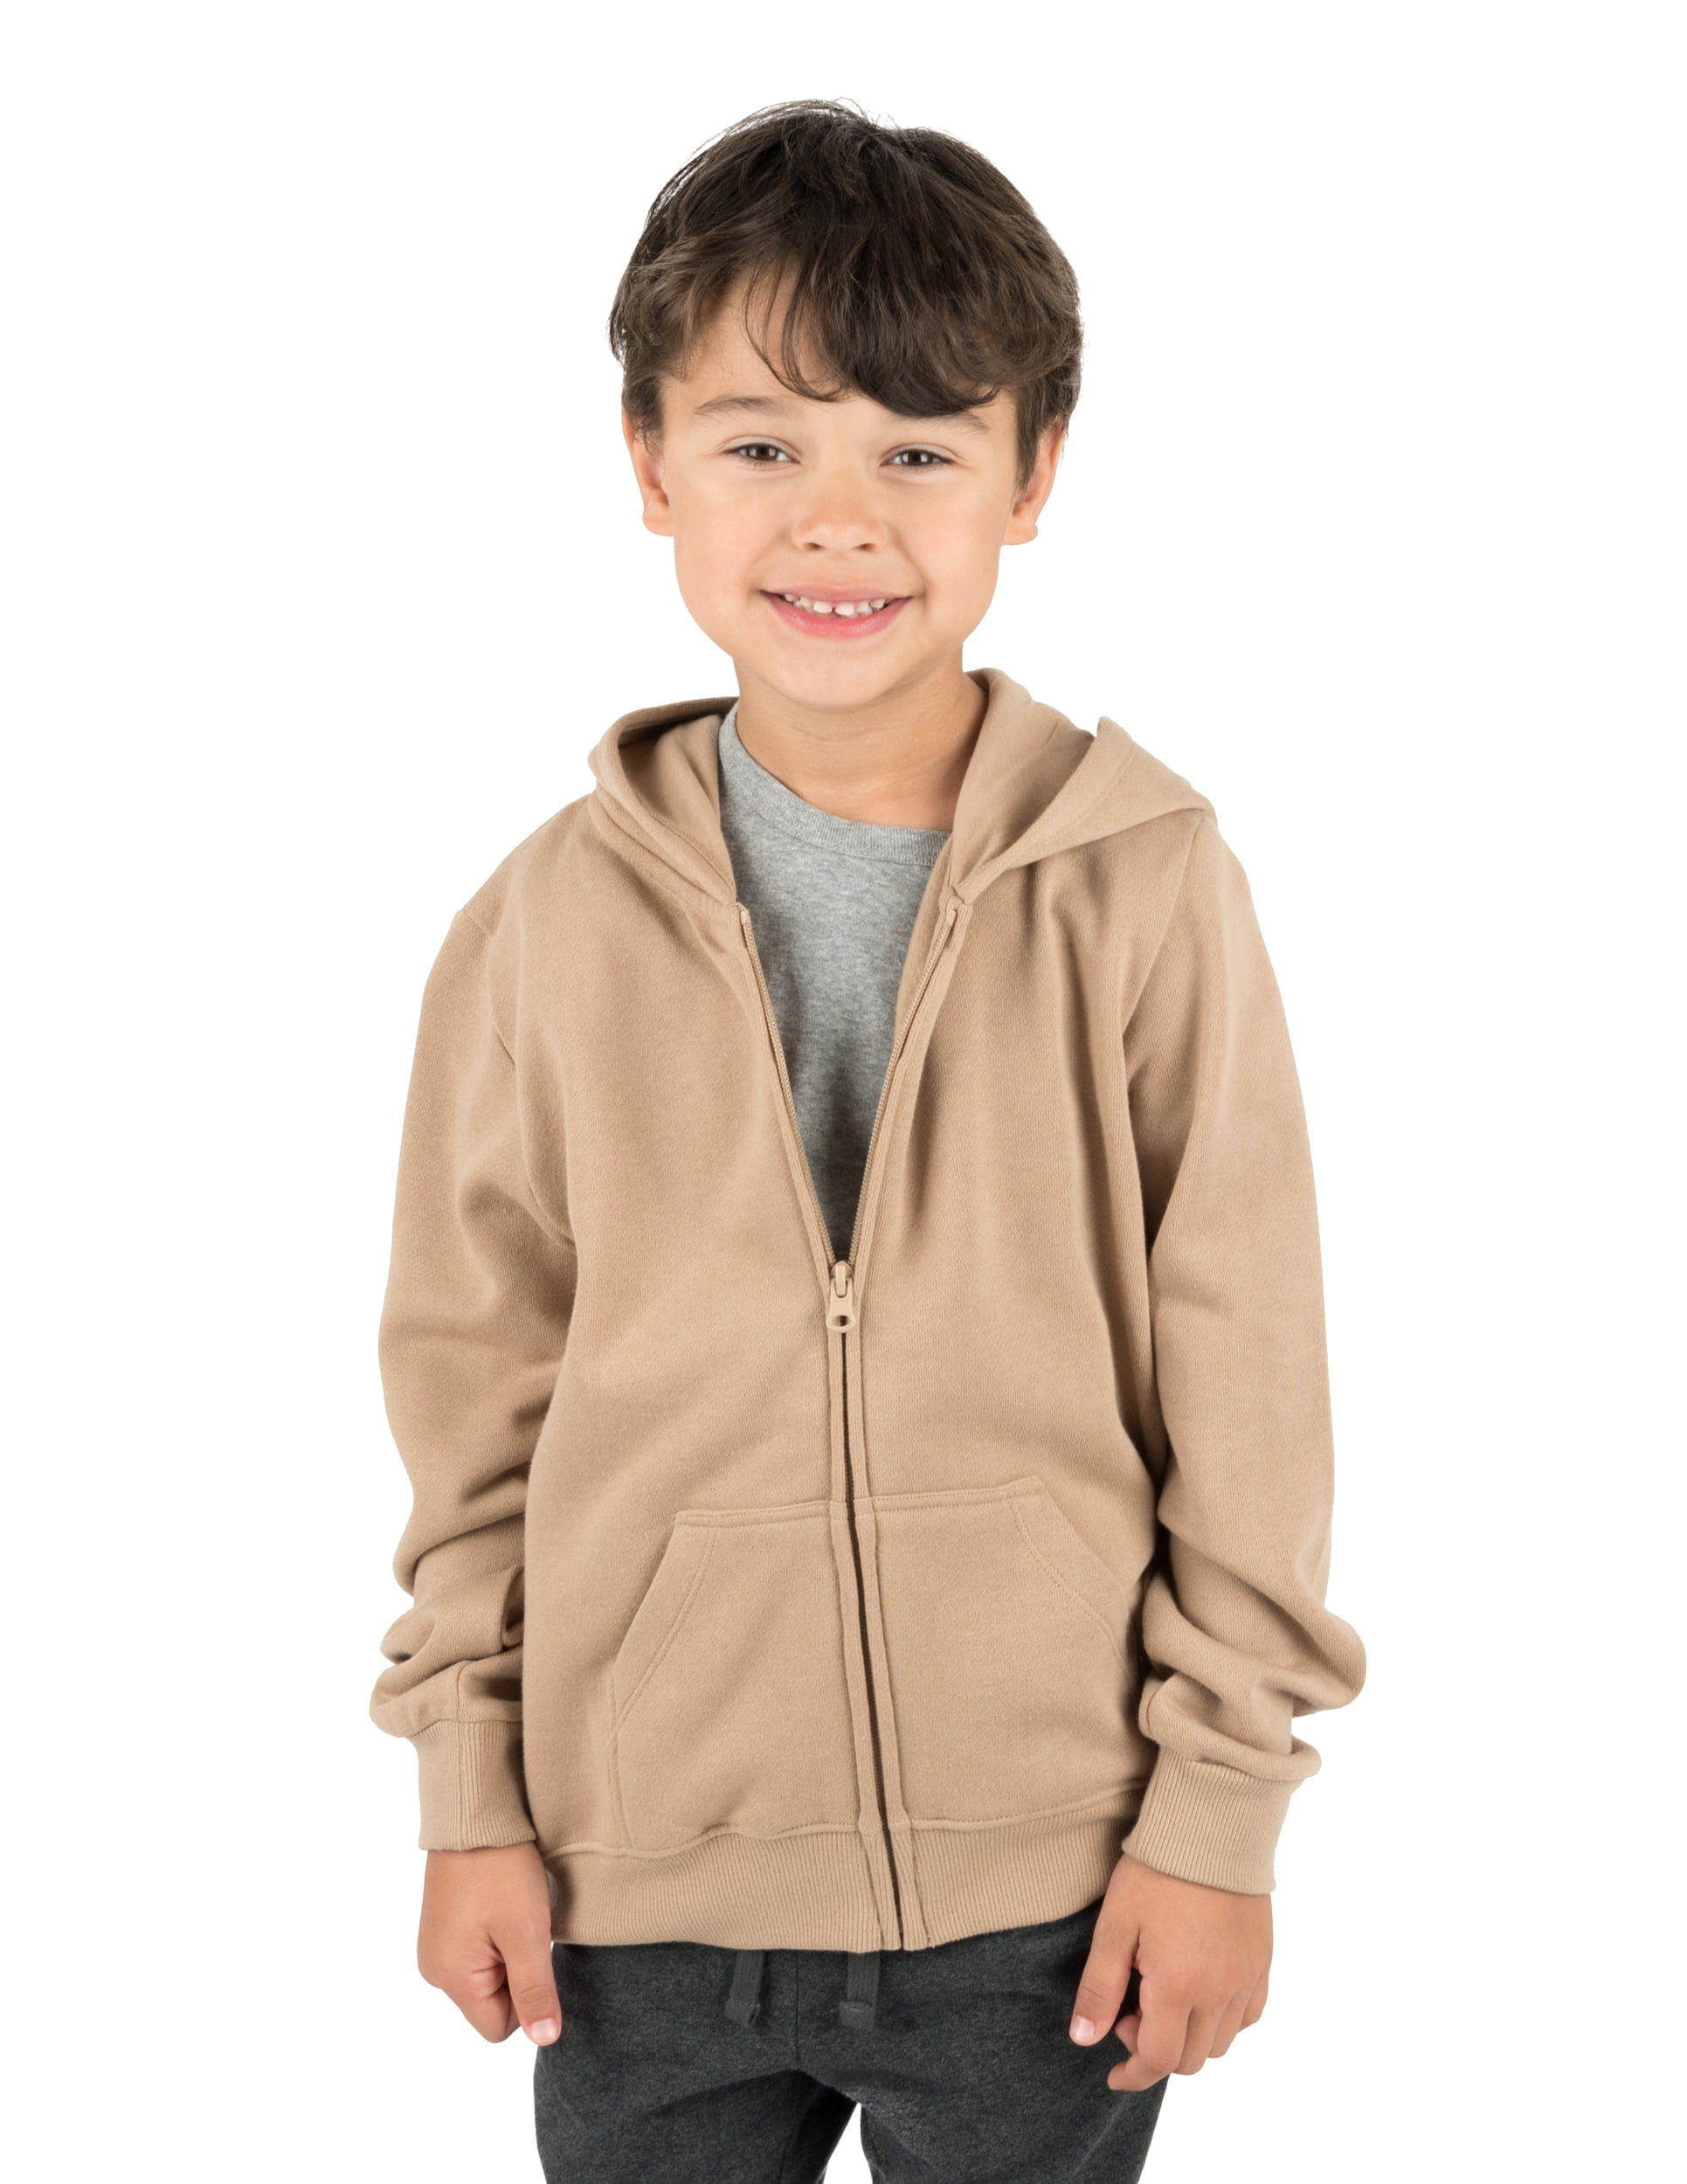 Leveret Kids & Toddler Hoodie Boys Girls 100% Cotton Zip-Up Hoodie Jacket 2-14 Years Variety of Colors 